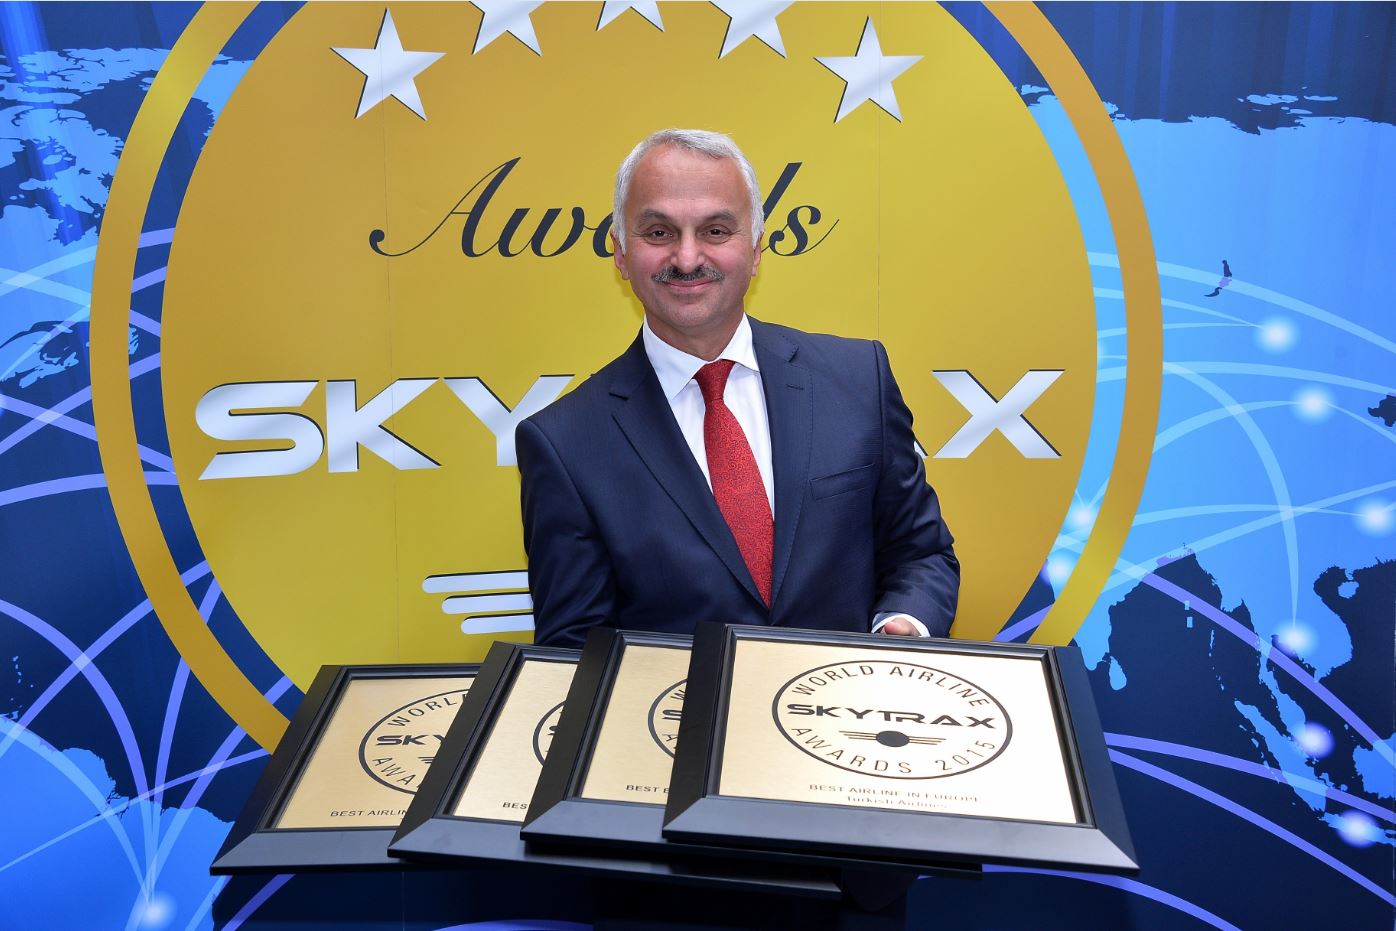 Turkish Airlines CEO Mr, Temel Kotil holding the award